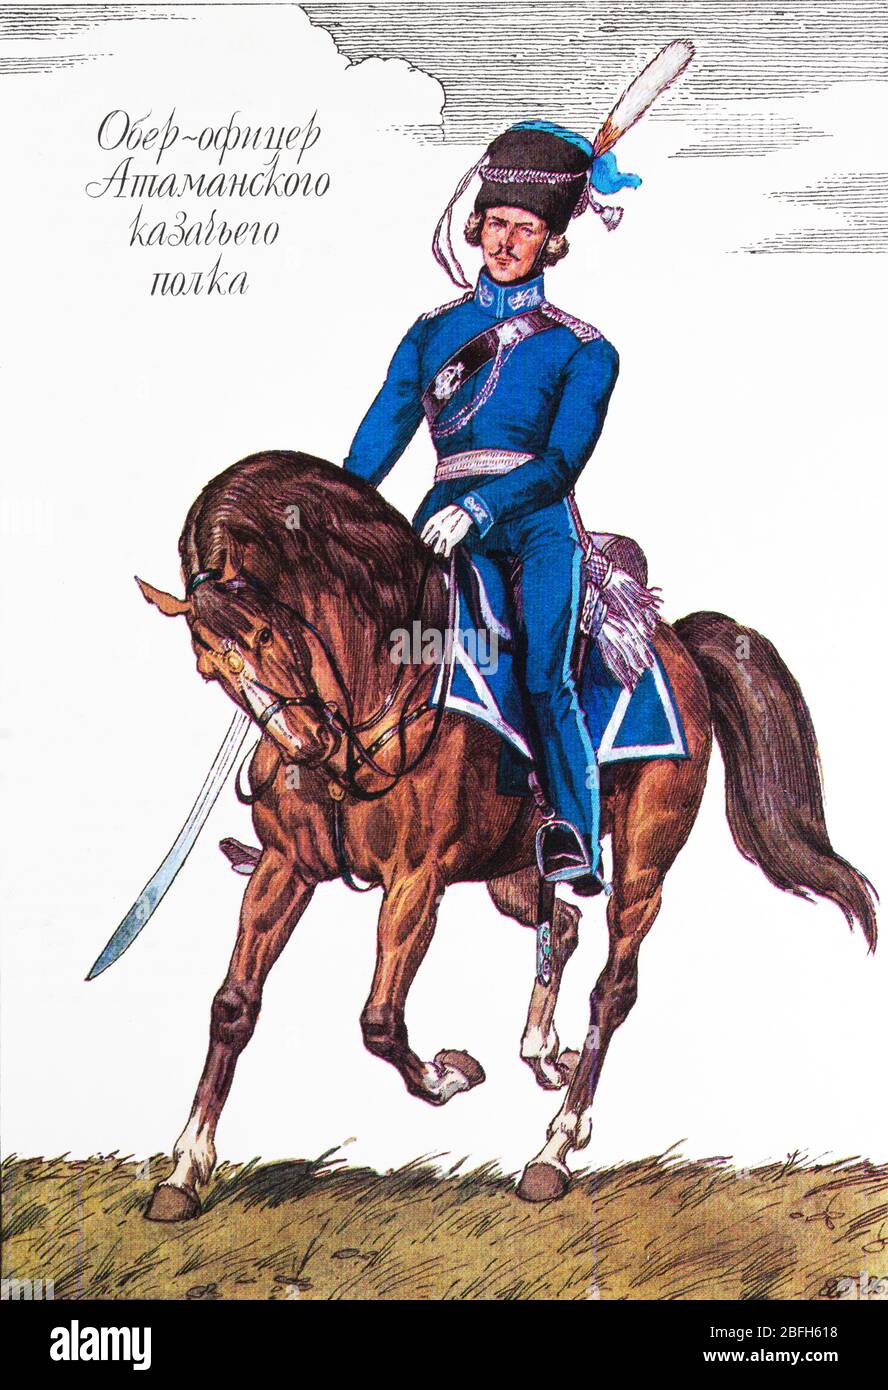 Ataman cossack cavalry regiment petty officer, 1812, 19th century Russian  army uniform, Russia Stock Photo - Alamy